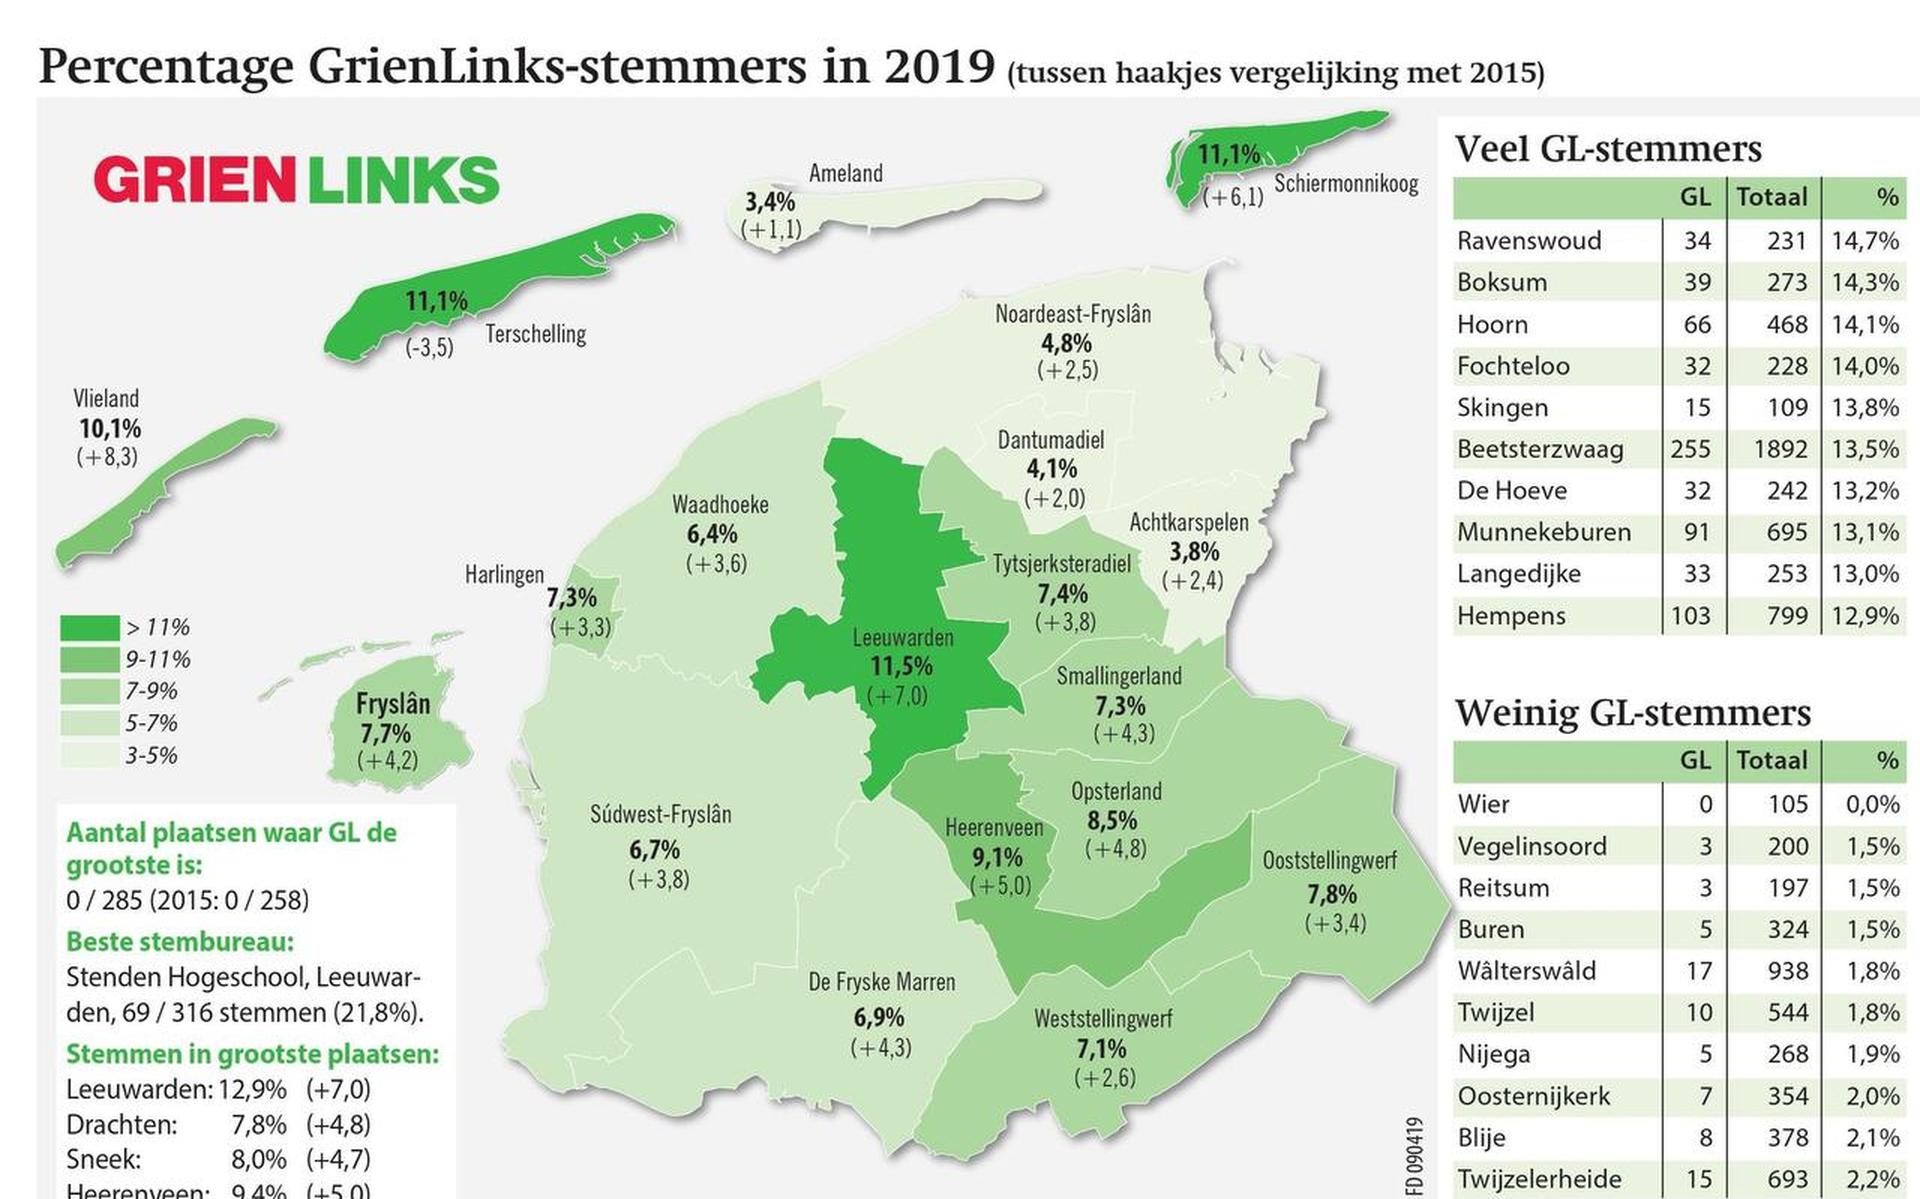 Percentage GrienLinks-stemmers in 2019.